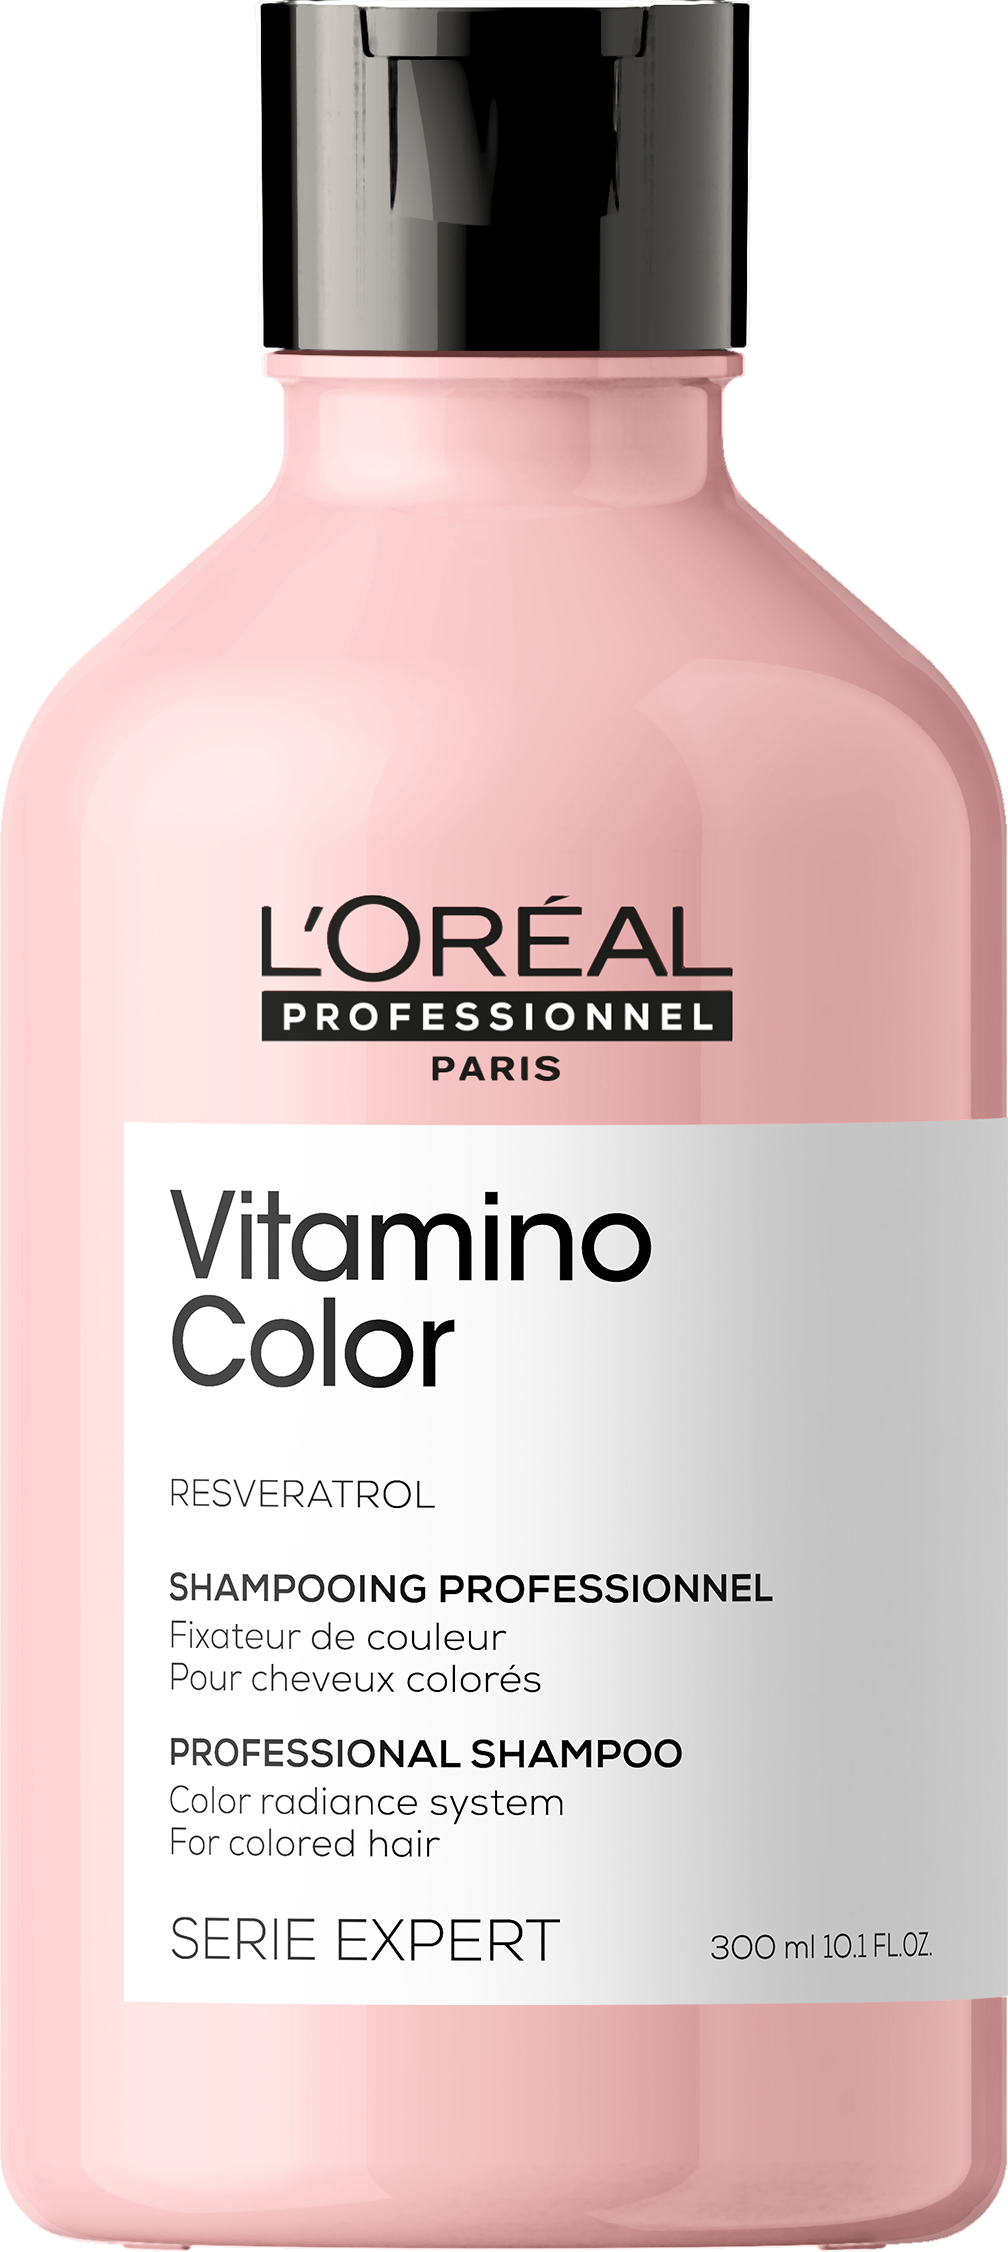 Serie Expert Vitamino Color A-OX shampoo